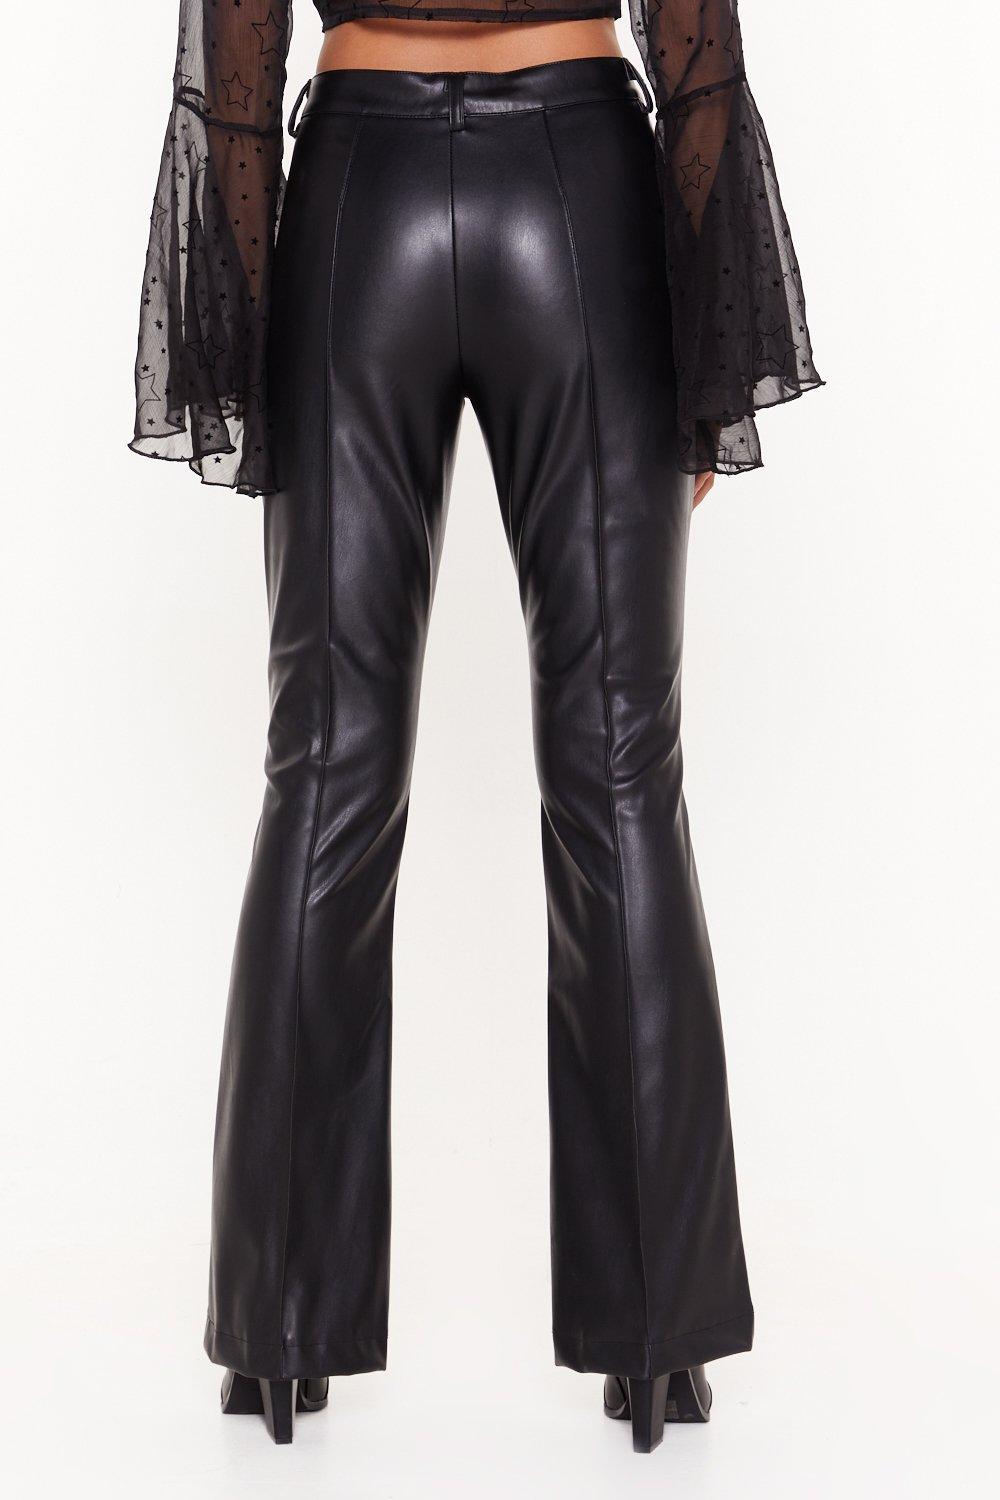 black high waisted leather pants